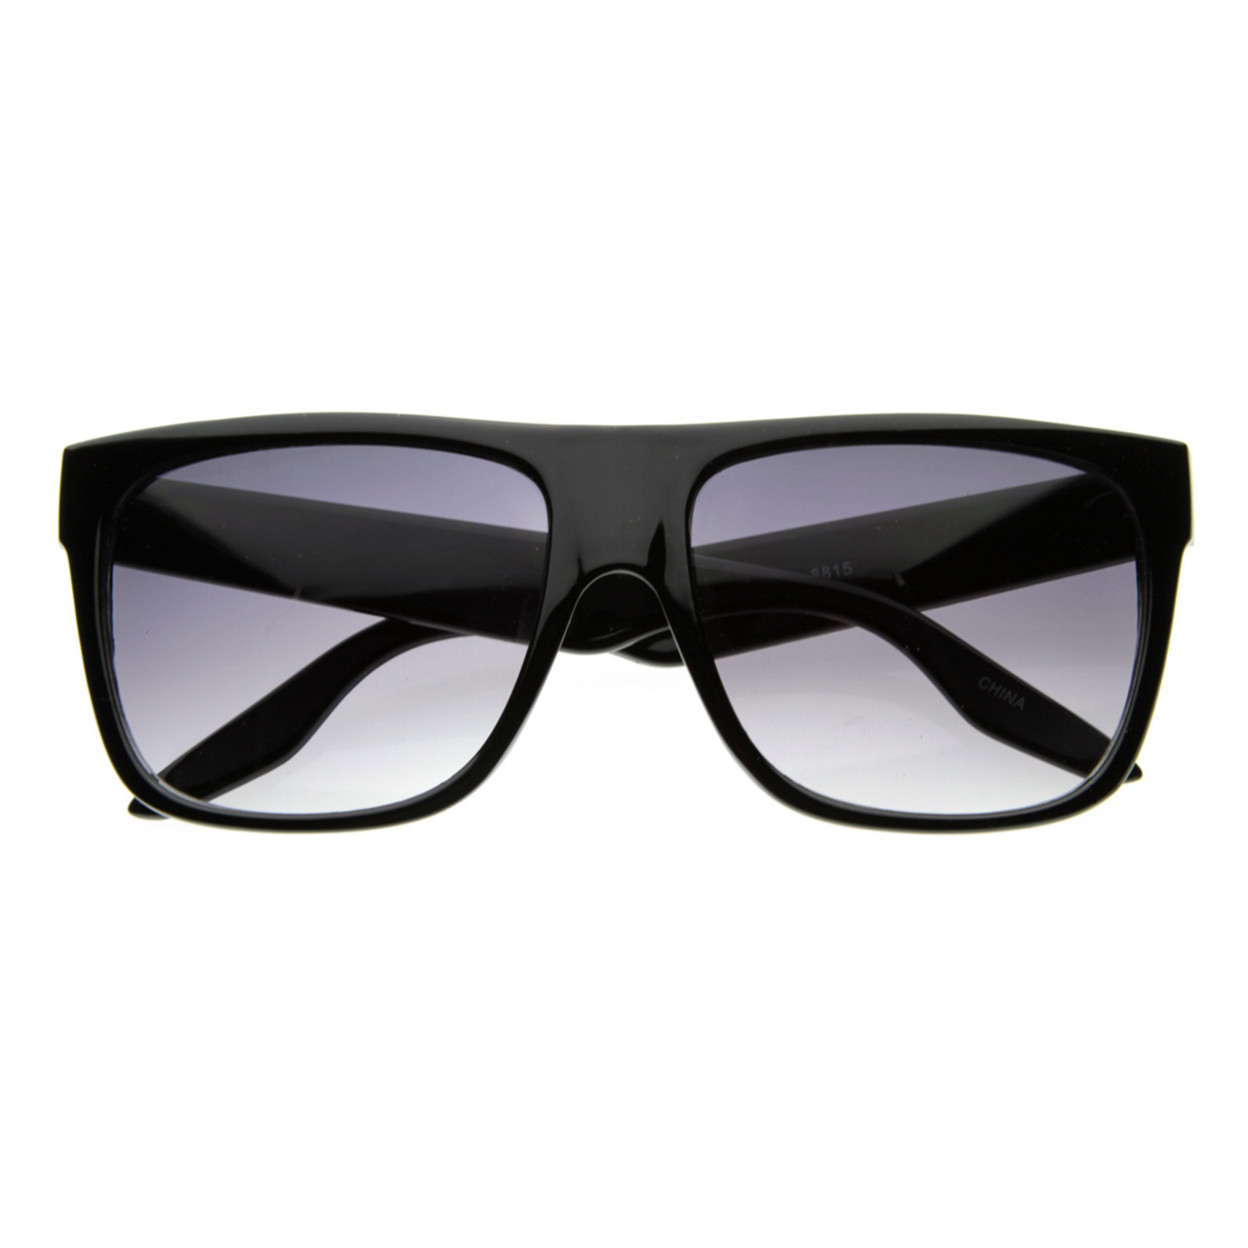 Casual Shades Menswear Plastic Flat Top Horned Rim Style Sunglasses Eyewear - 8256 - Shiny Black